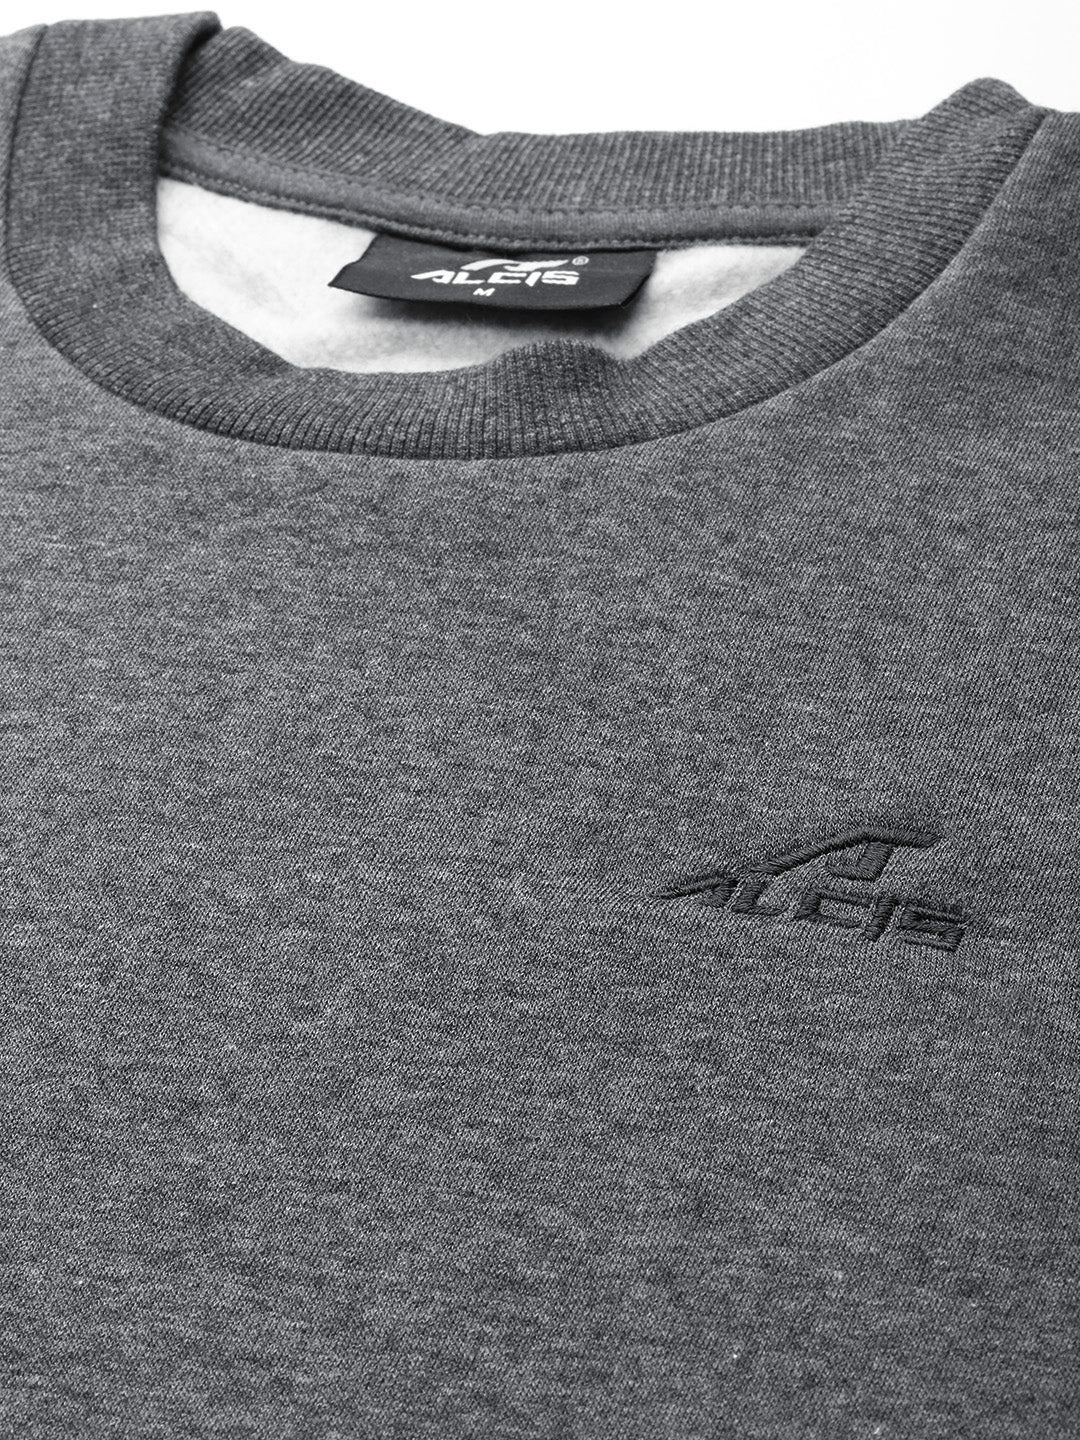 Alcis Men Charcoal Grey Solid Cotton Sweatshirt